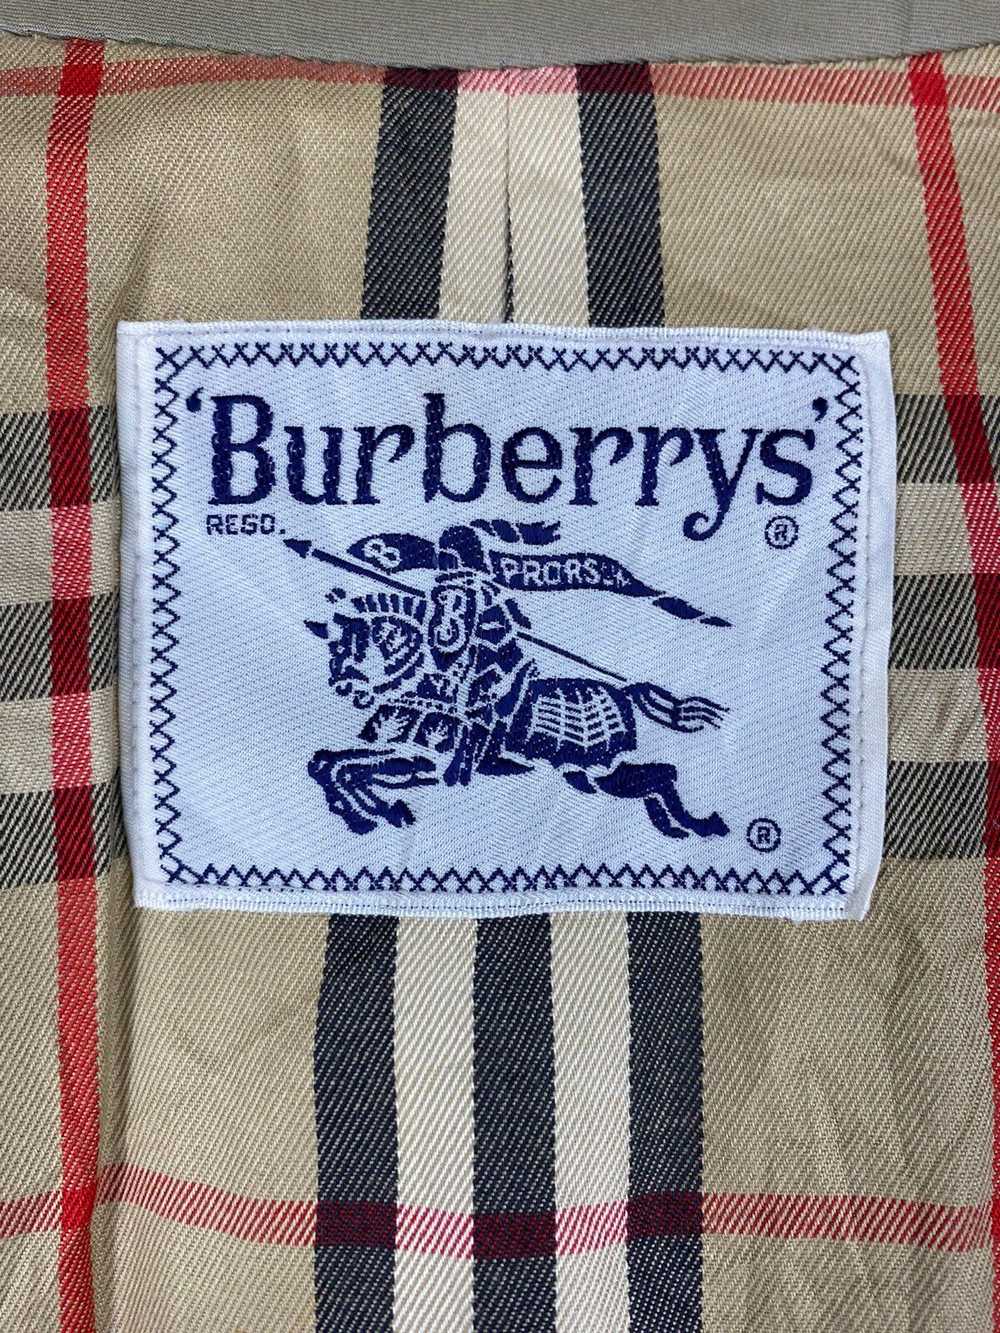 Burberry Vintage Burberry Top Coat - image 5